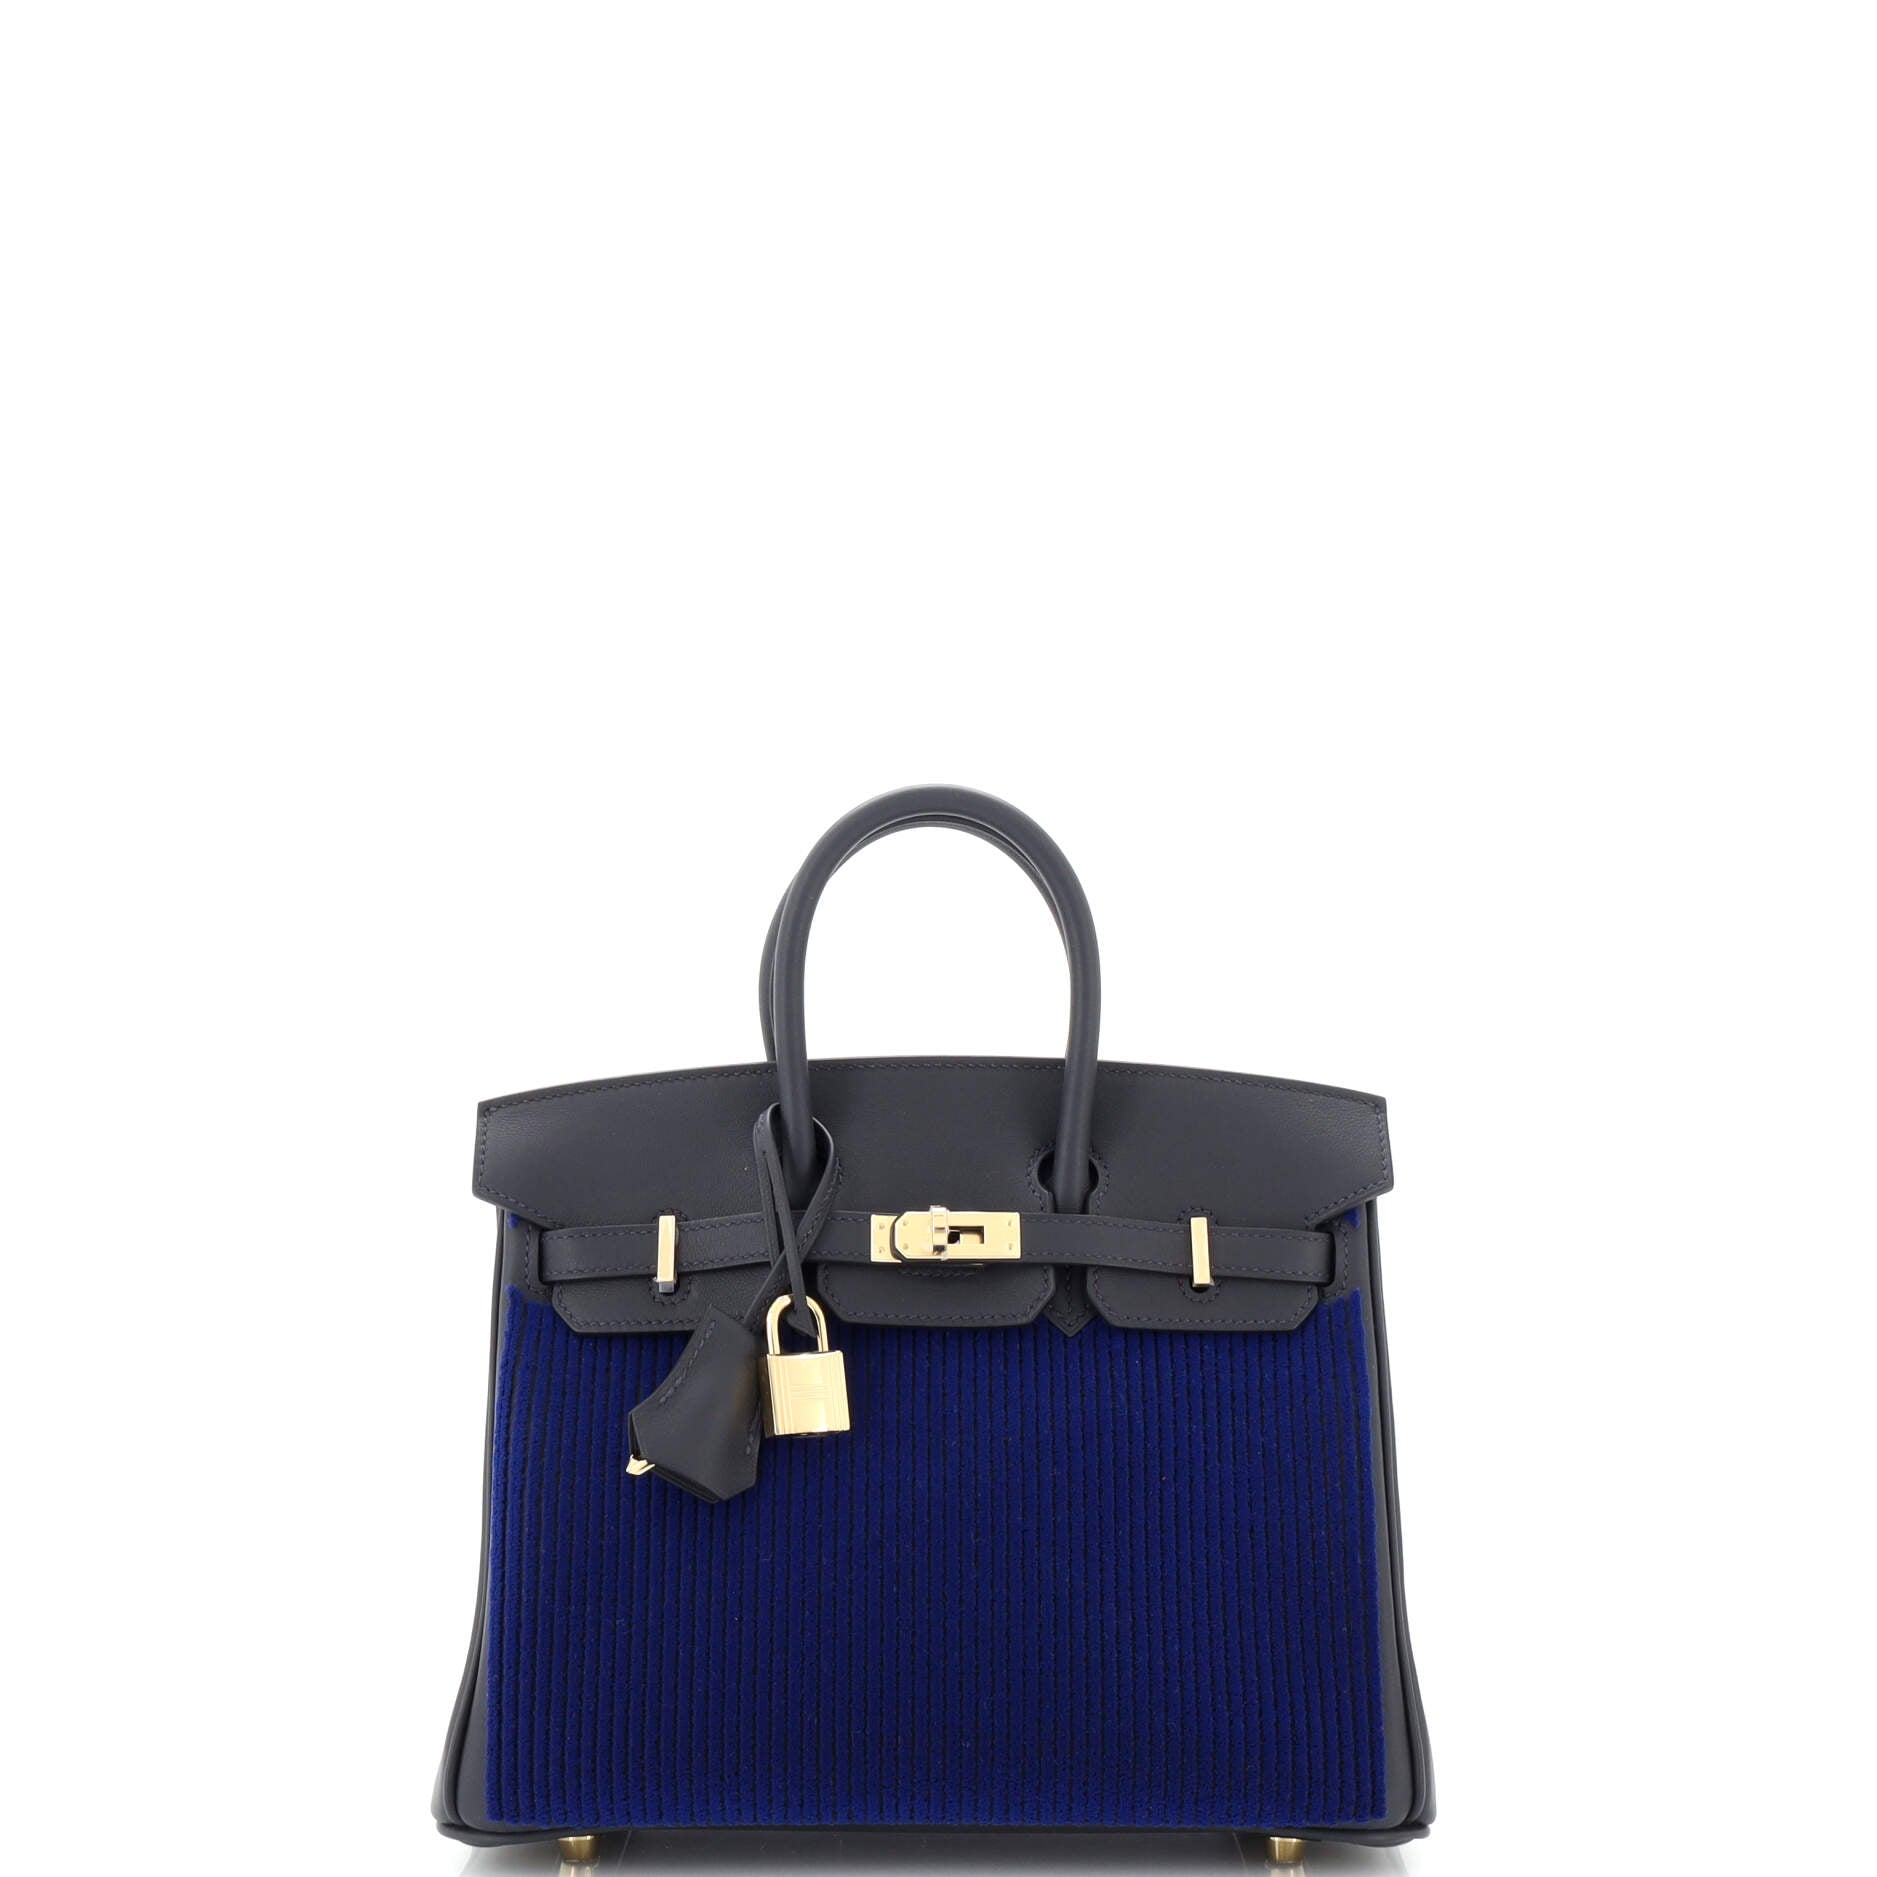 Cote a Cote Birkin Handbag Blue Tuffetage and Swift with Permabrass Hardware 25